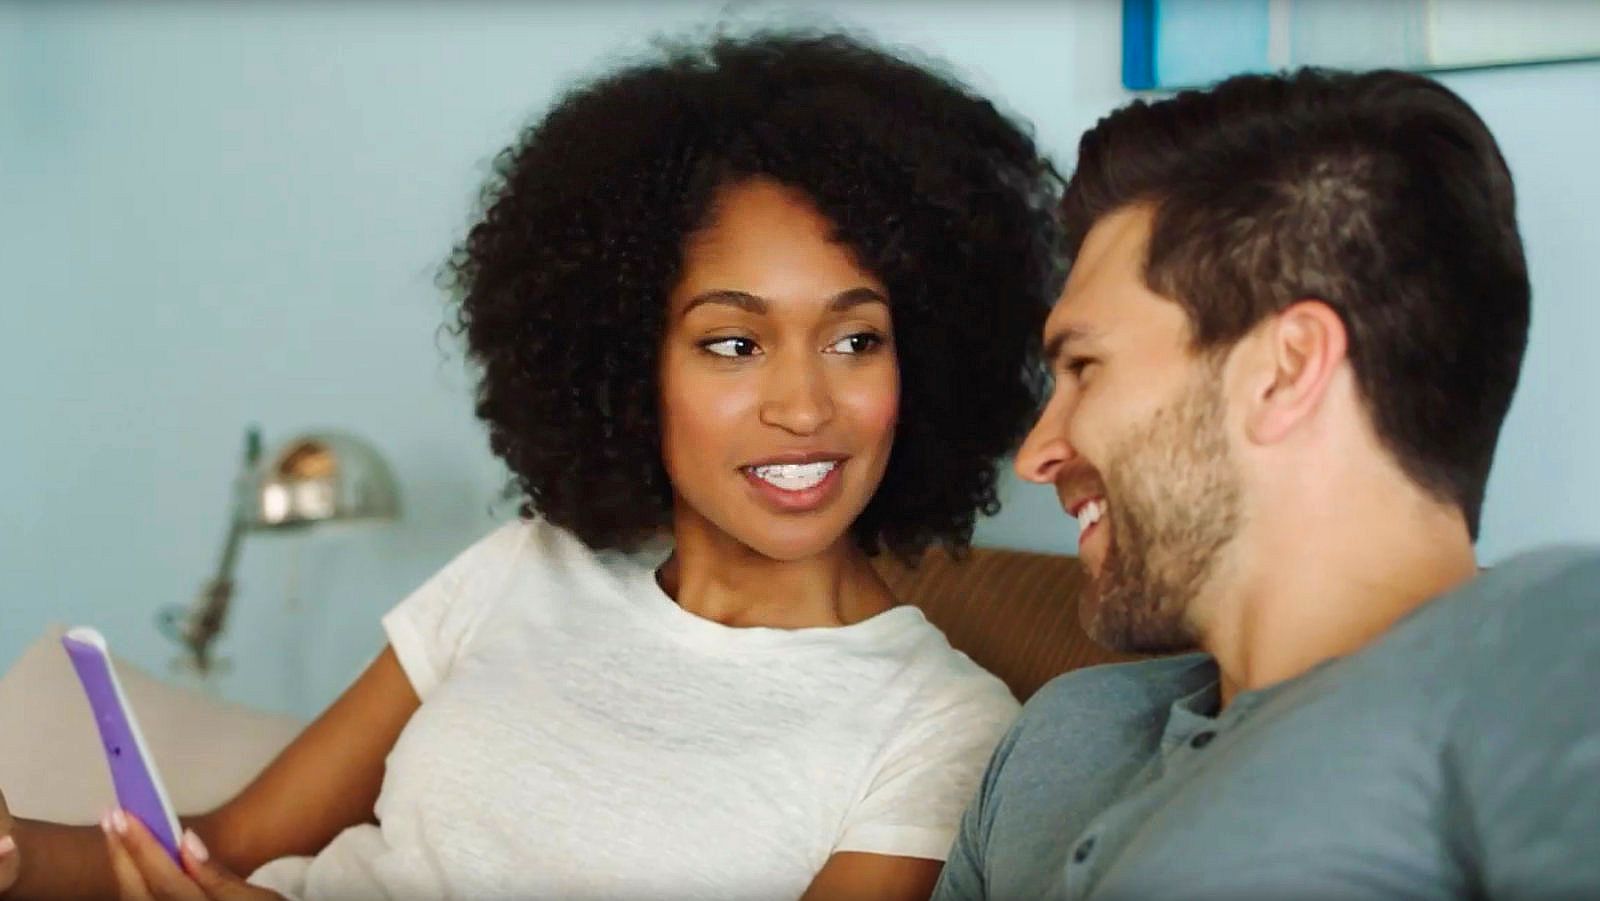  Interracial dating personals